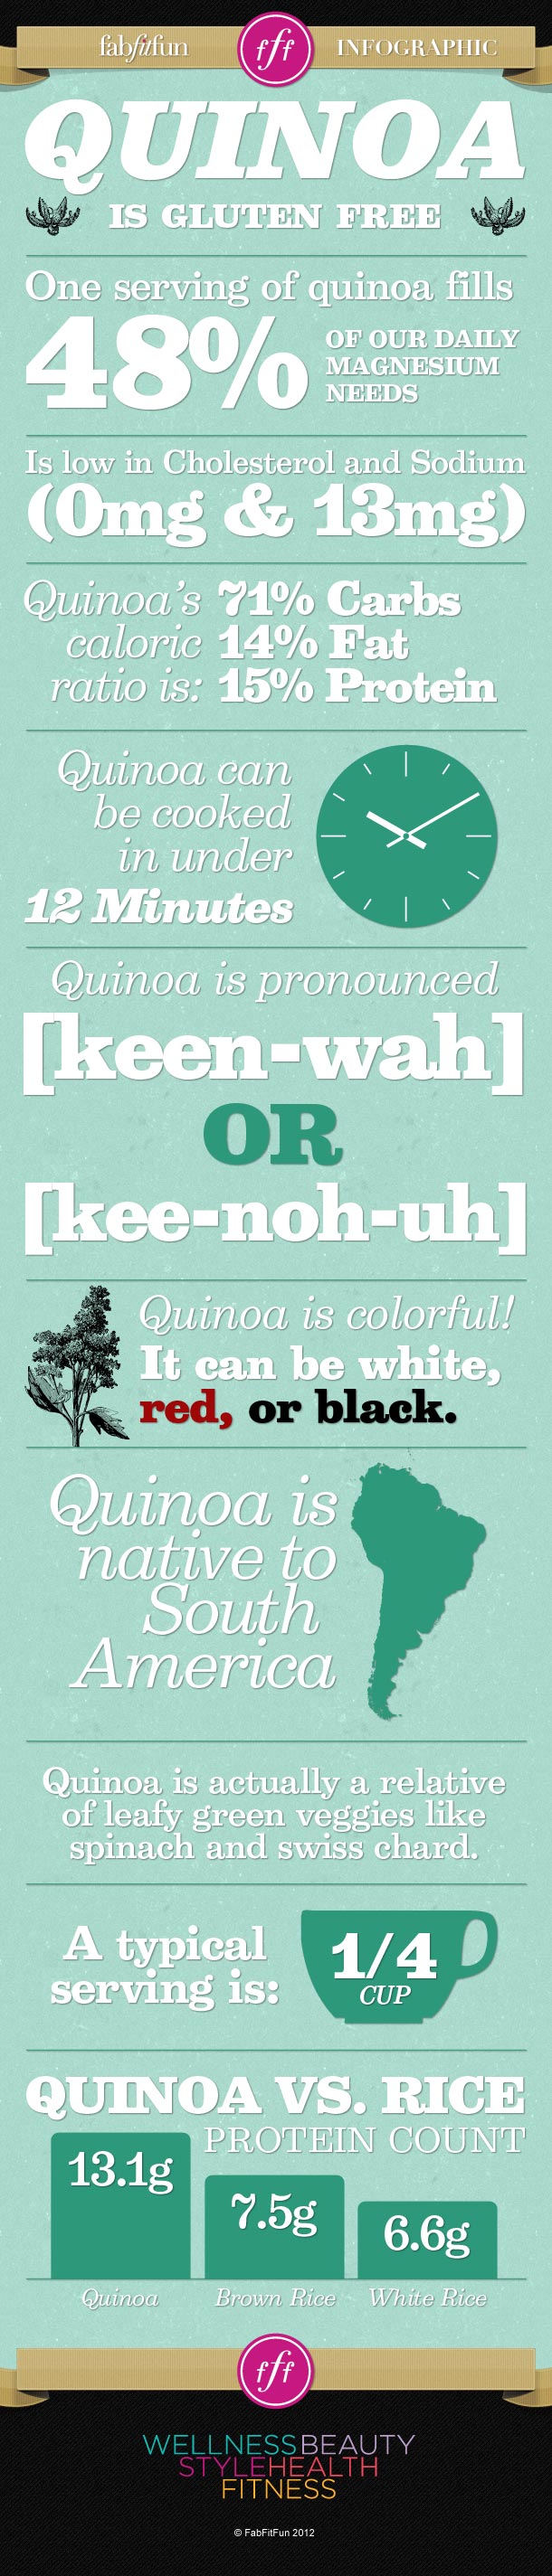 quinoa-infographic-large-green